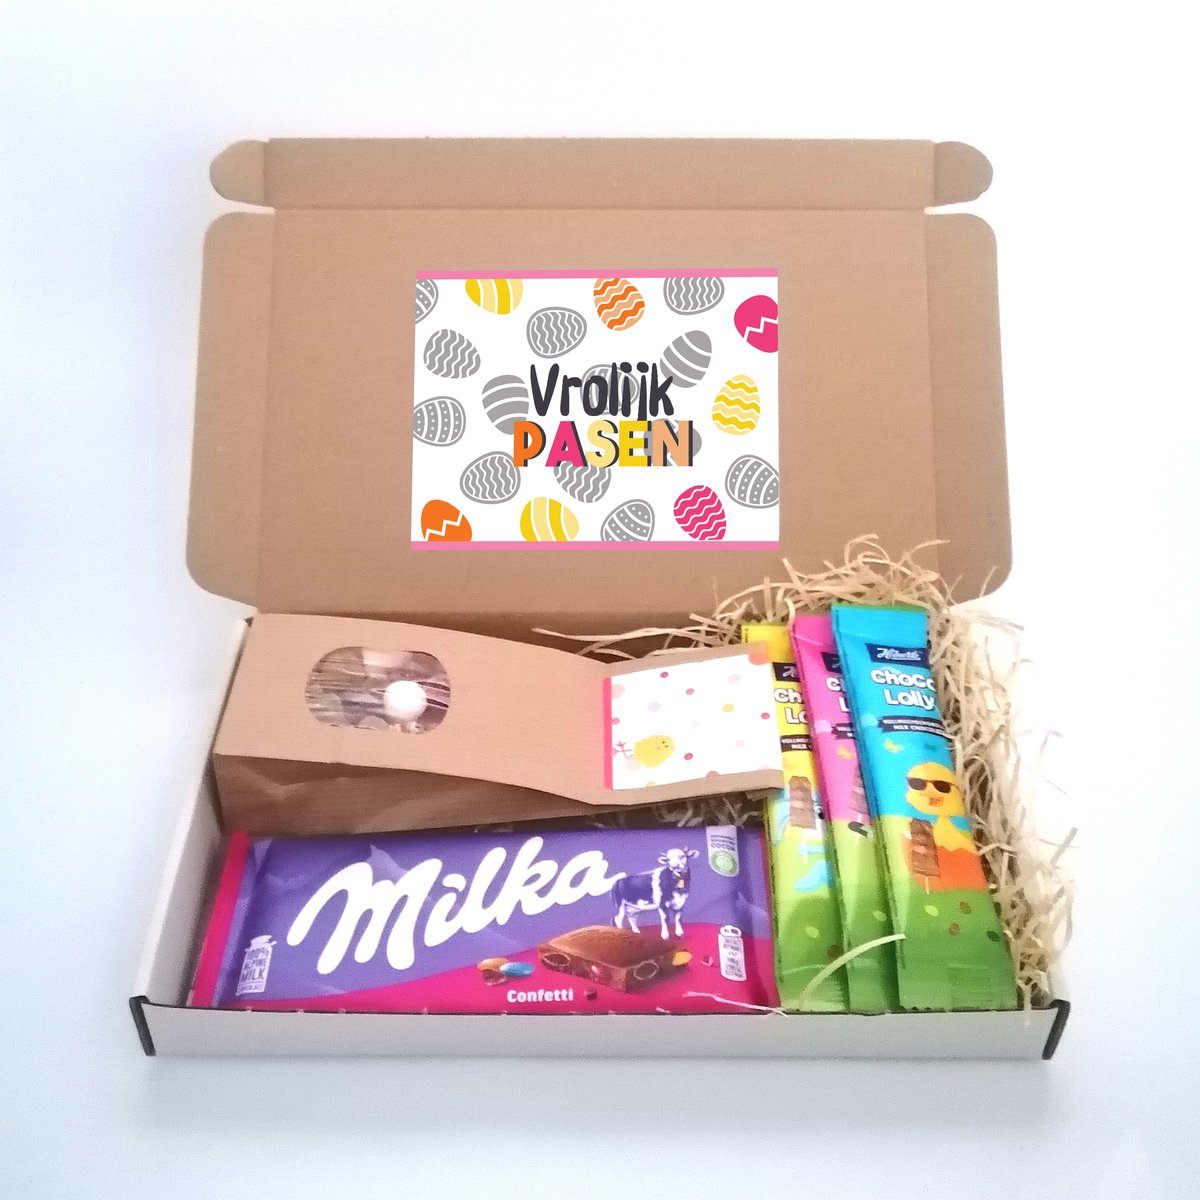 Pasen chocolade cadeau - brievenbuspakket Vrolijk Pasen - Pasen chocolade lolly - Tum Tum - Milka confetti chocolade - Lekker & Zoet